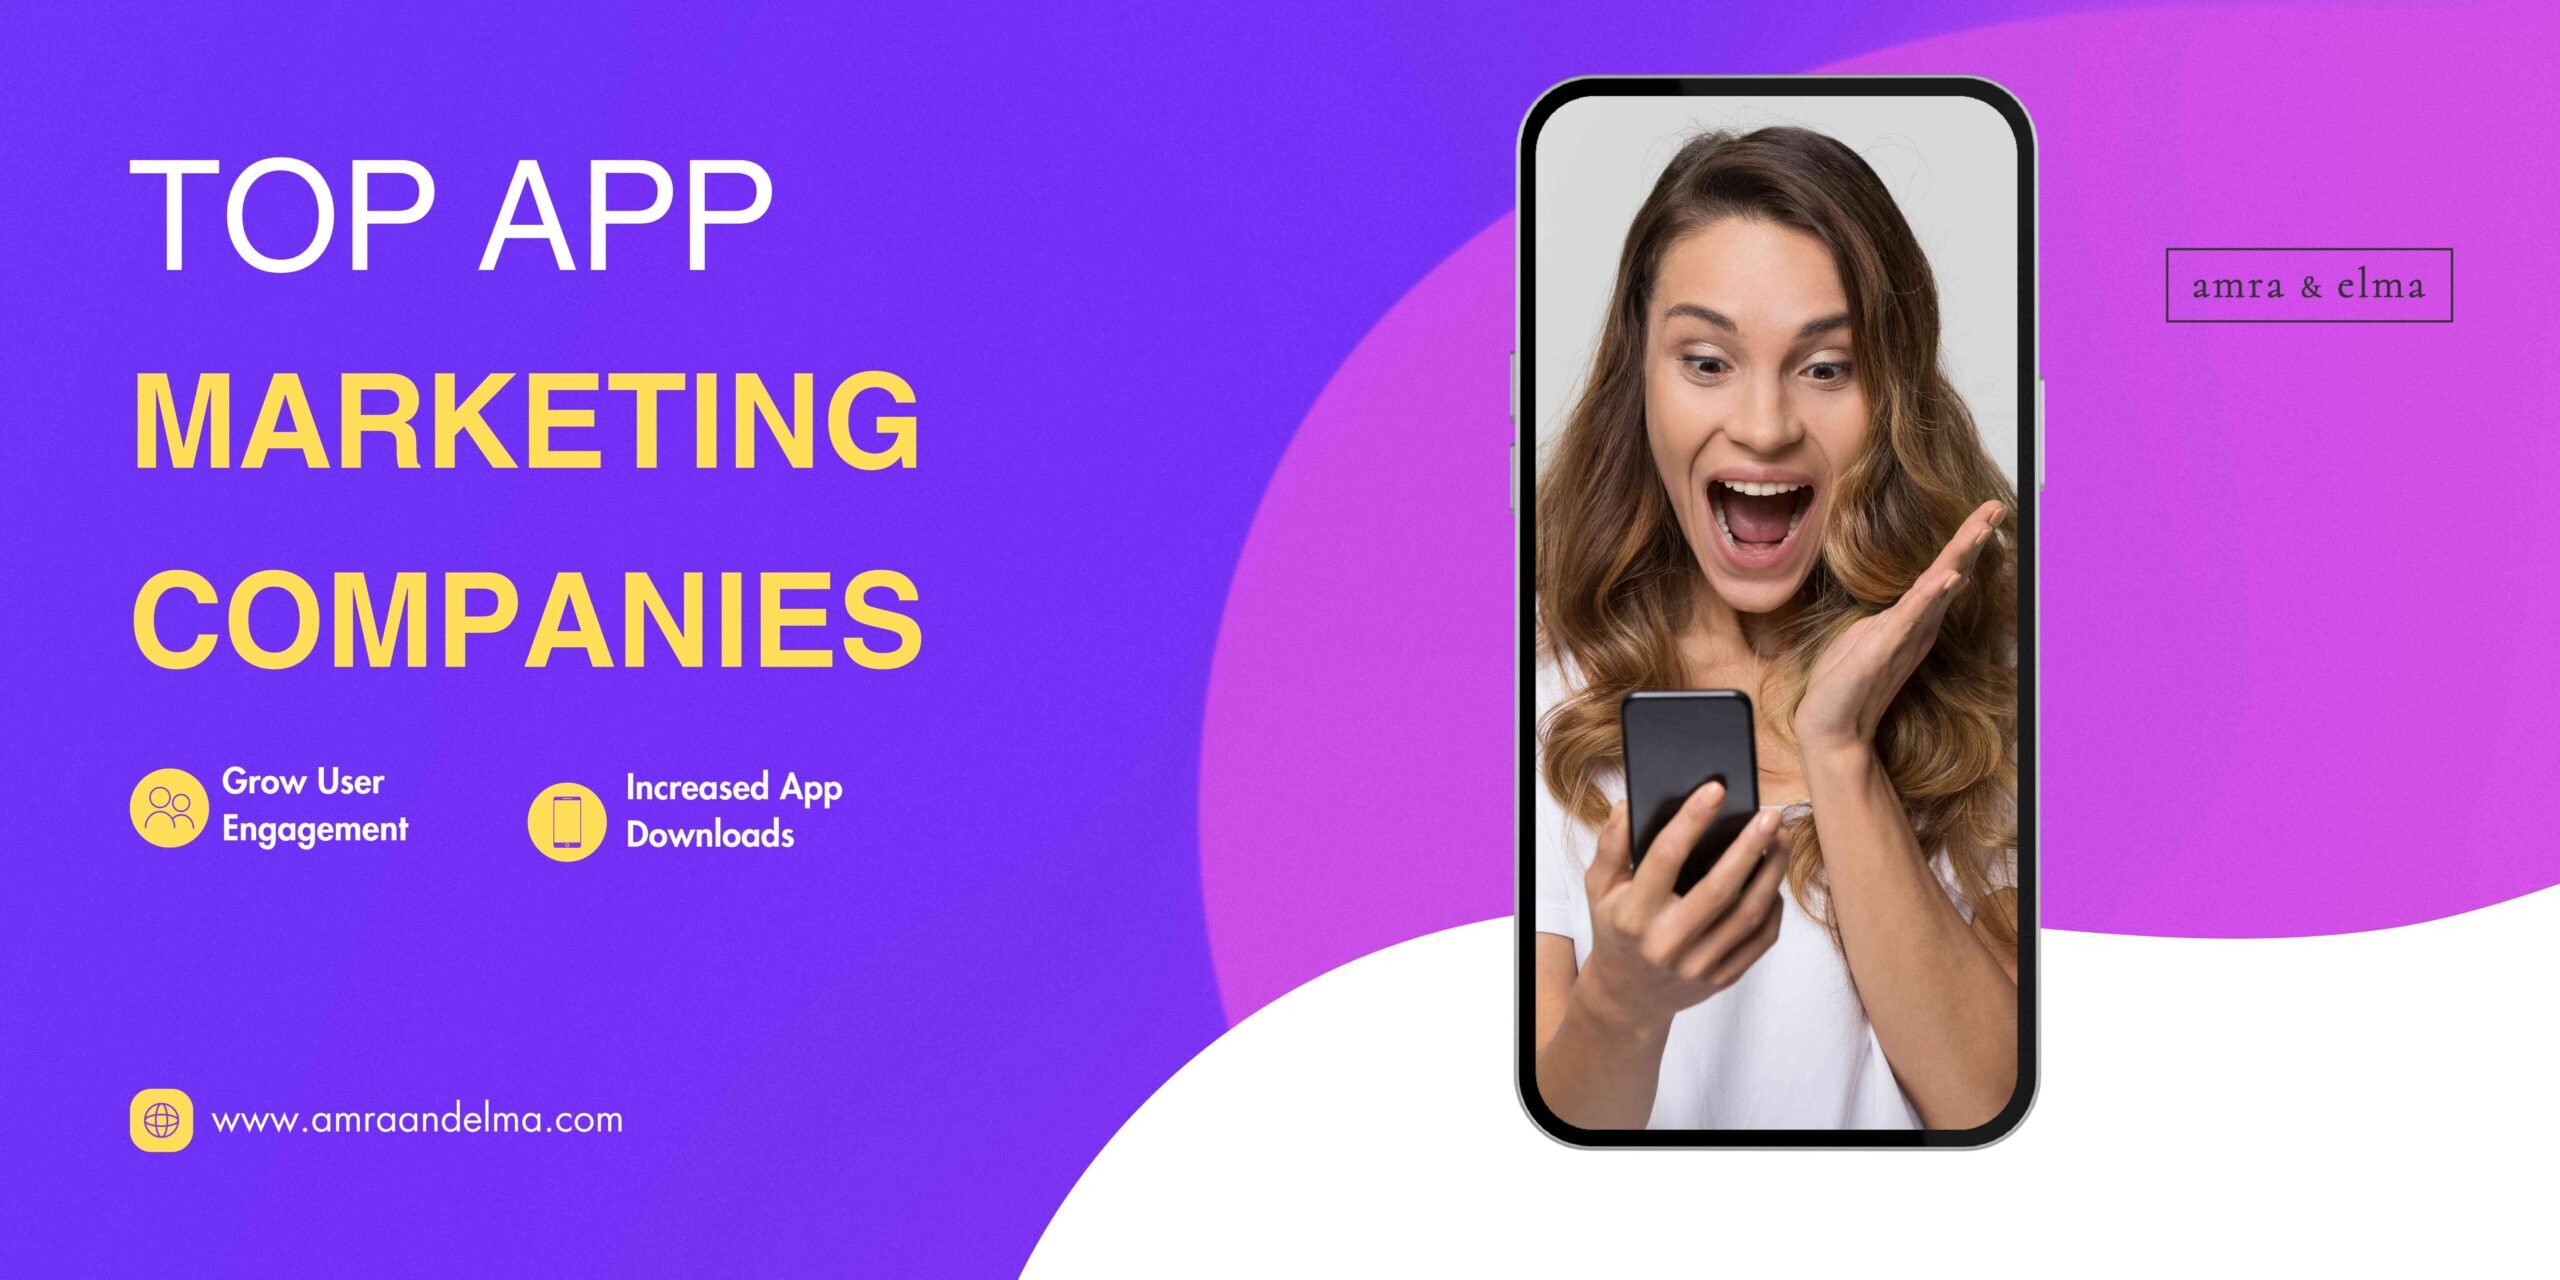 Top App Marketing Companies